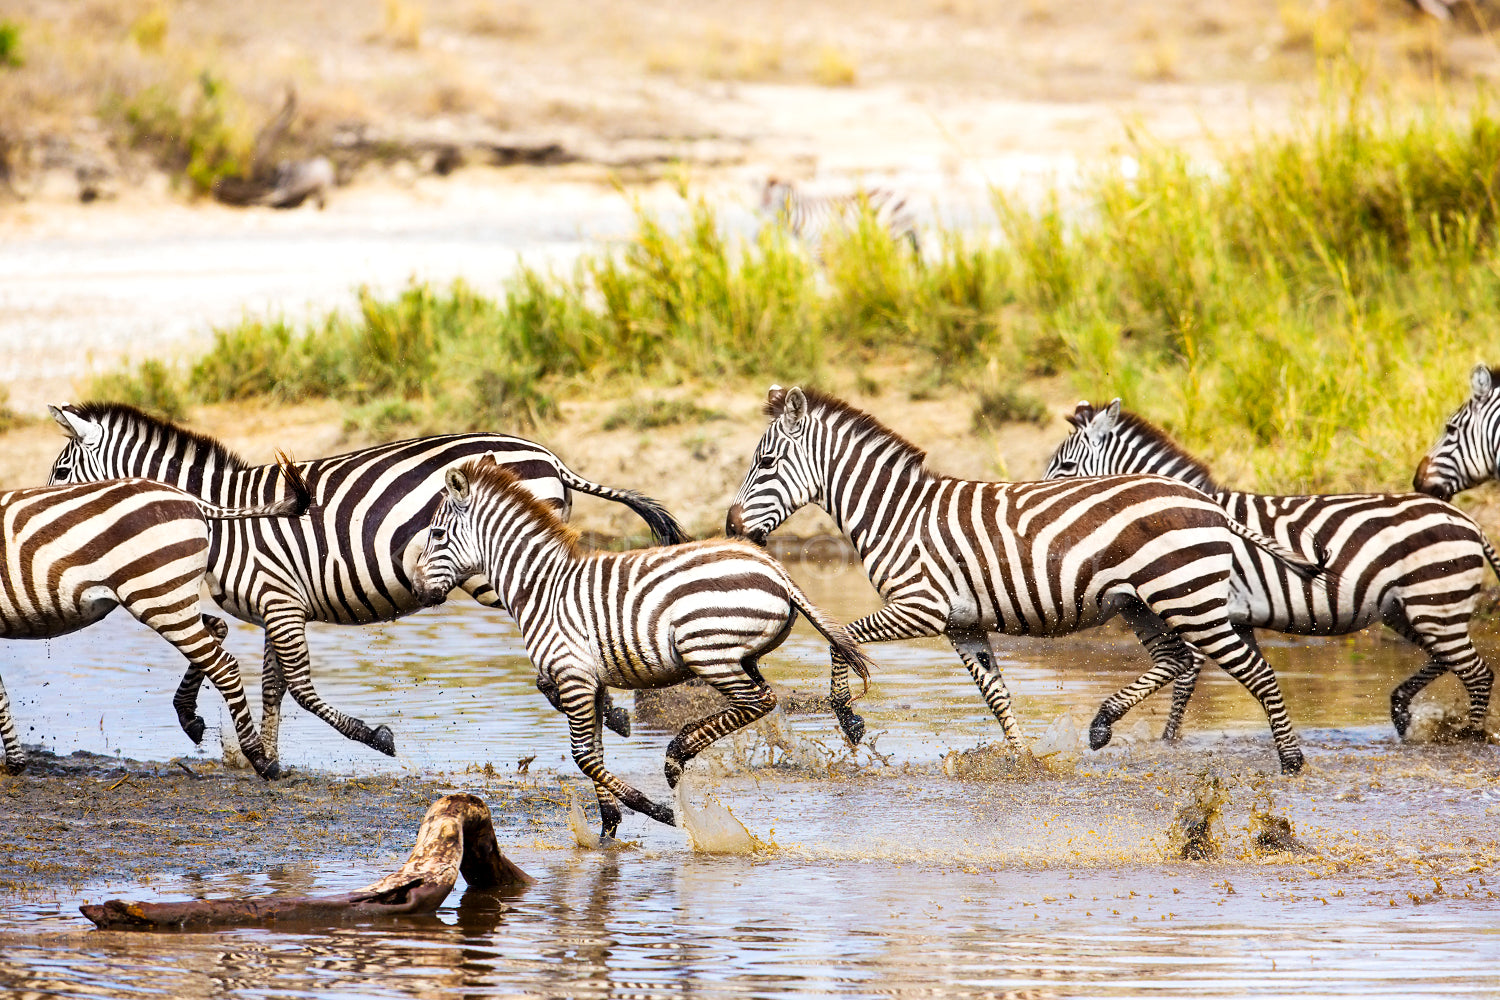 Zebras runs in the water